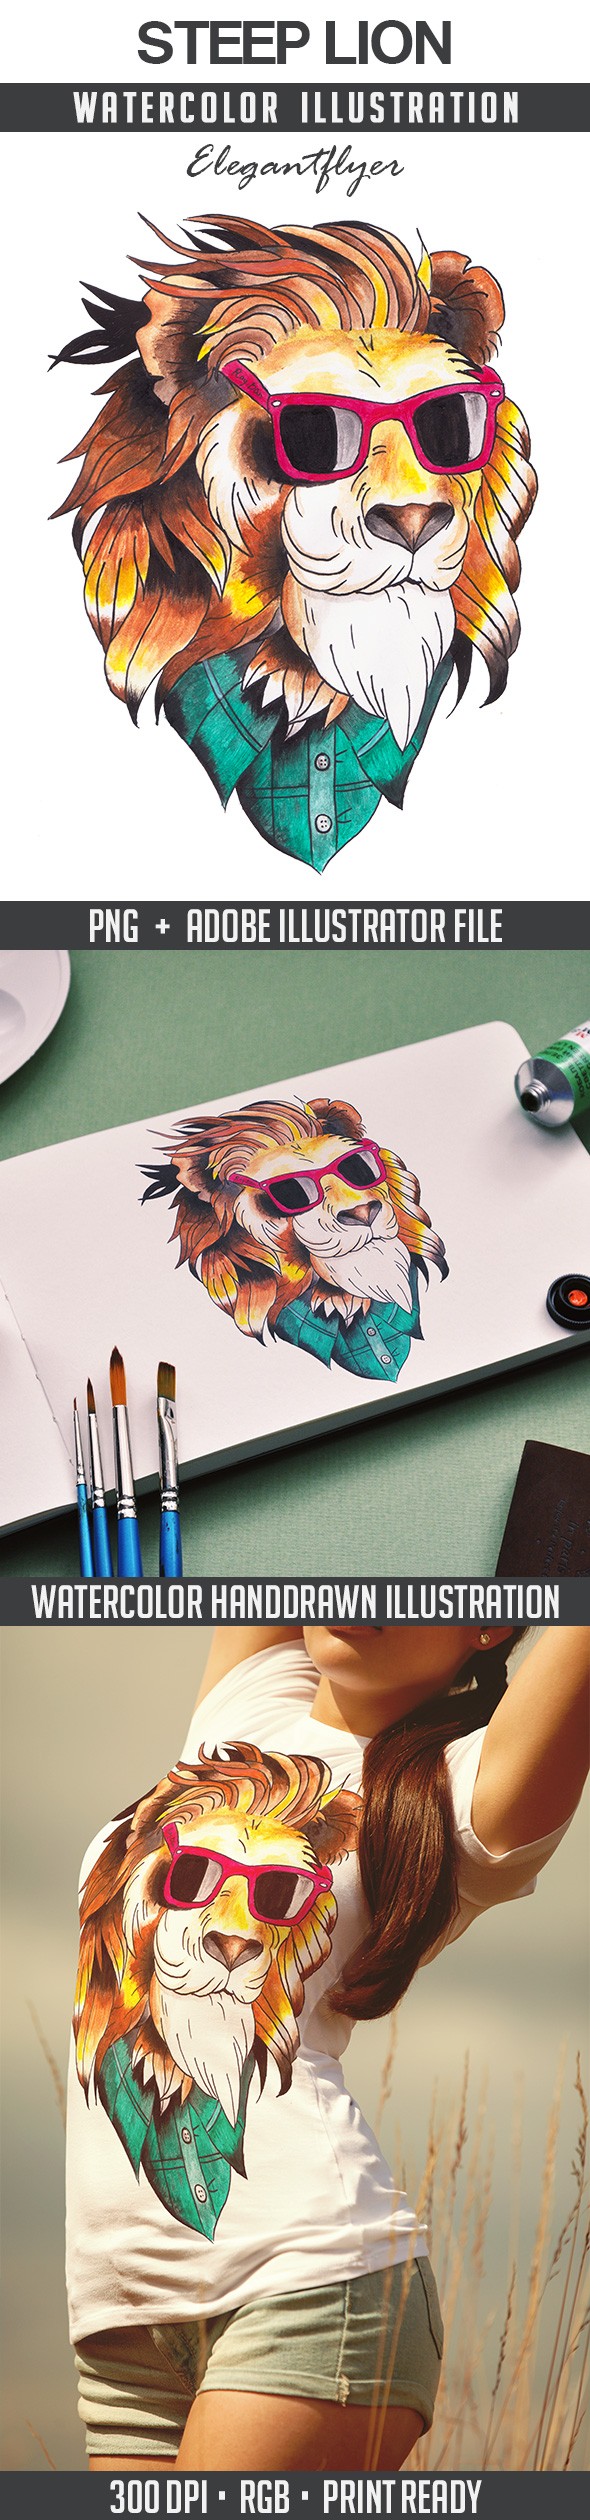 Steep Lion by ElegantFlyer